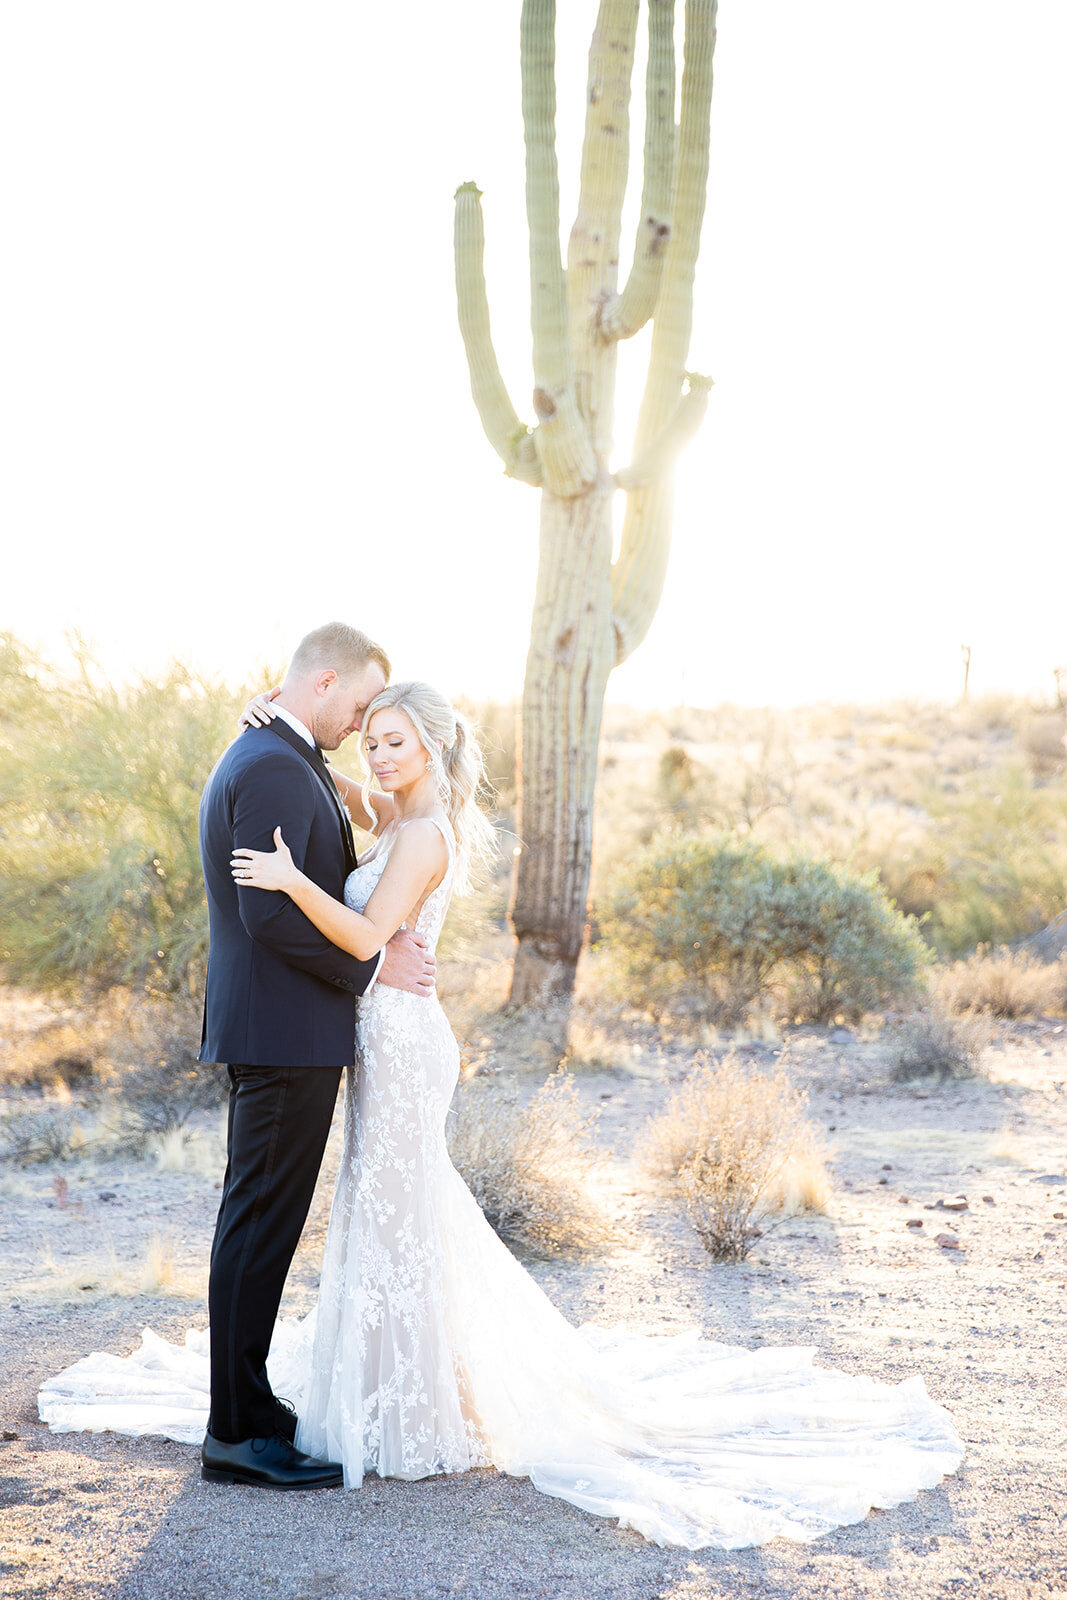 Karlie Colleen Photography - Ashley & Grant Wedding - The Paseo - Phoenix Arizona-767